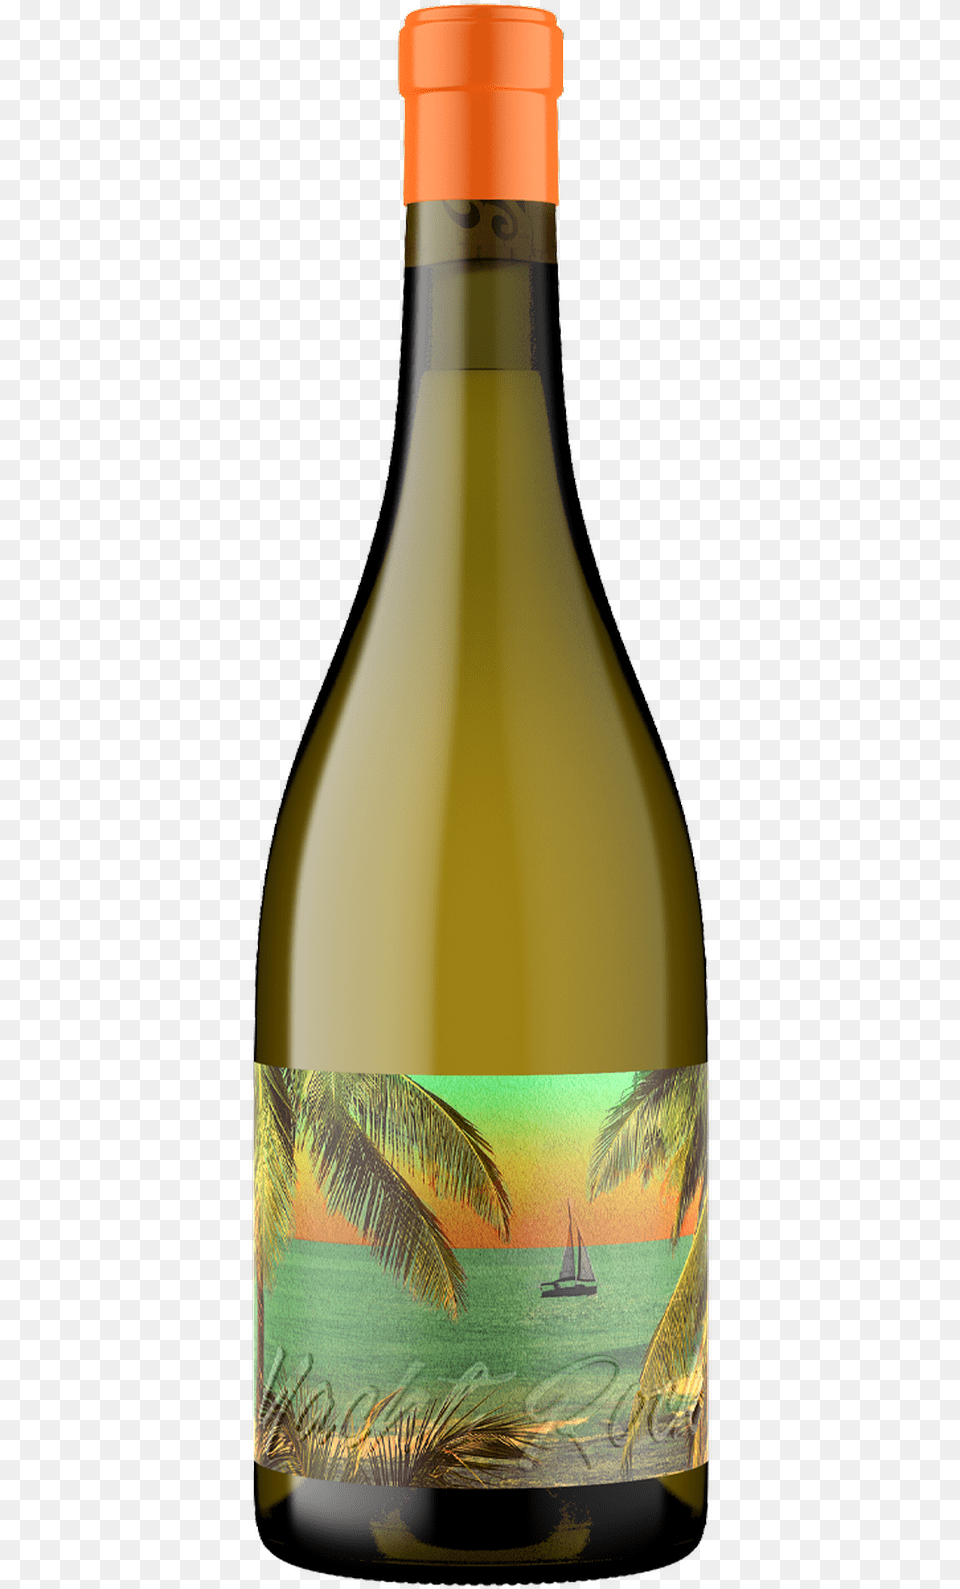 2018 Yacht Rock White Wine Napa Valley Glass Bottle, Alcohol, Liquor, Beverage, Wine Bottle Png